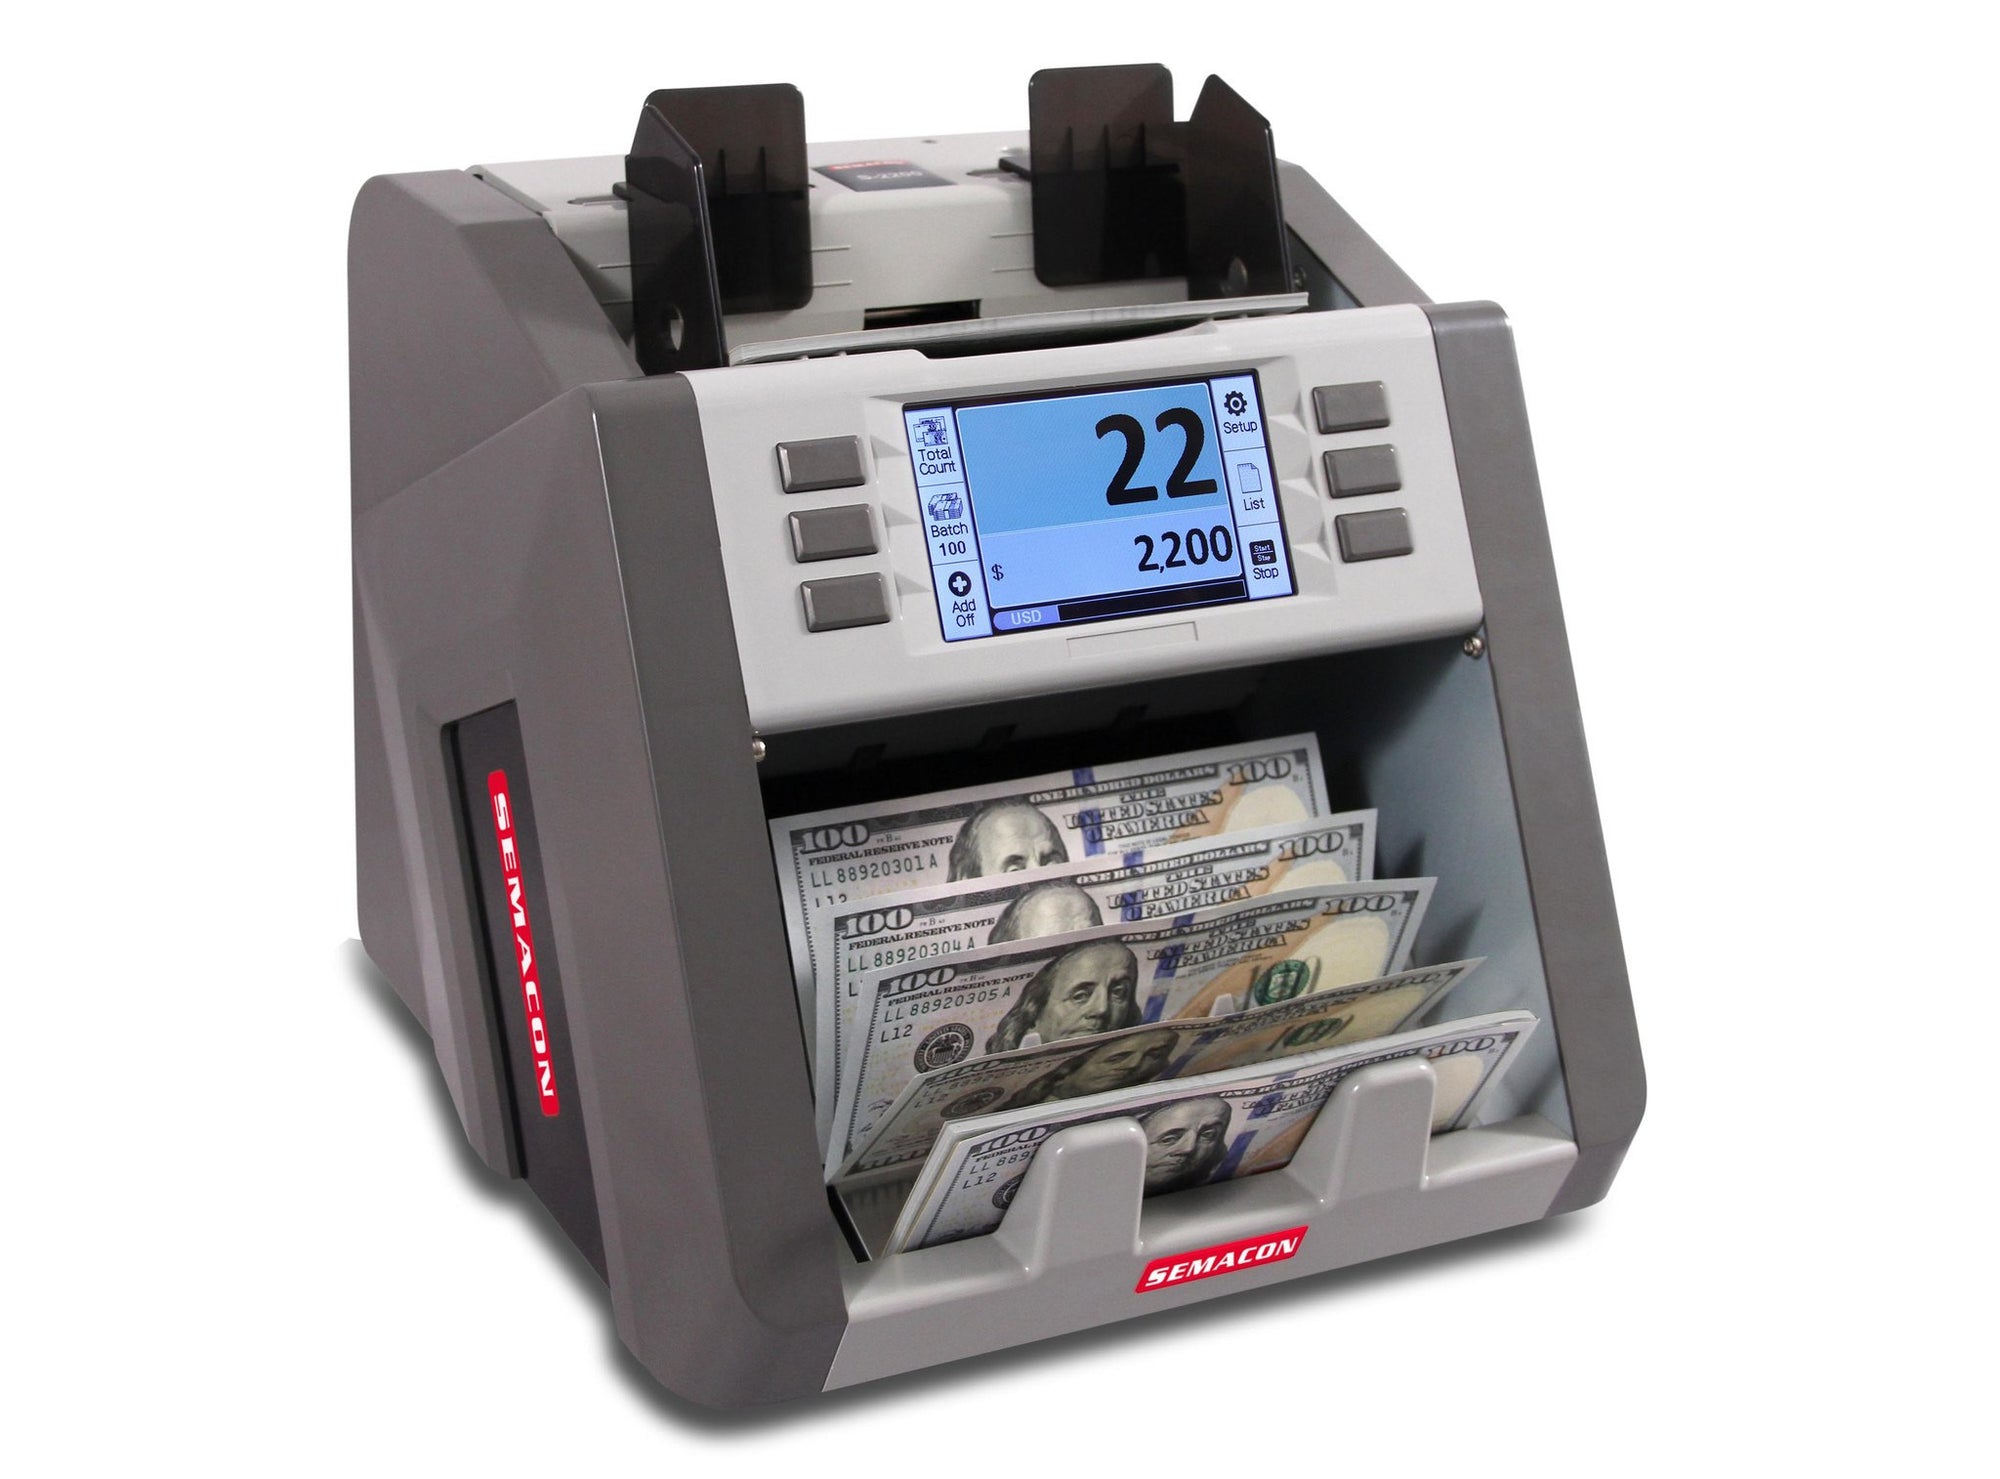 Semacon S-2200 Single Pocket Currency Discriminiator